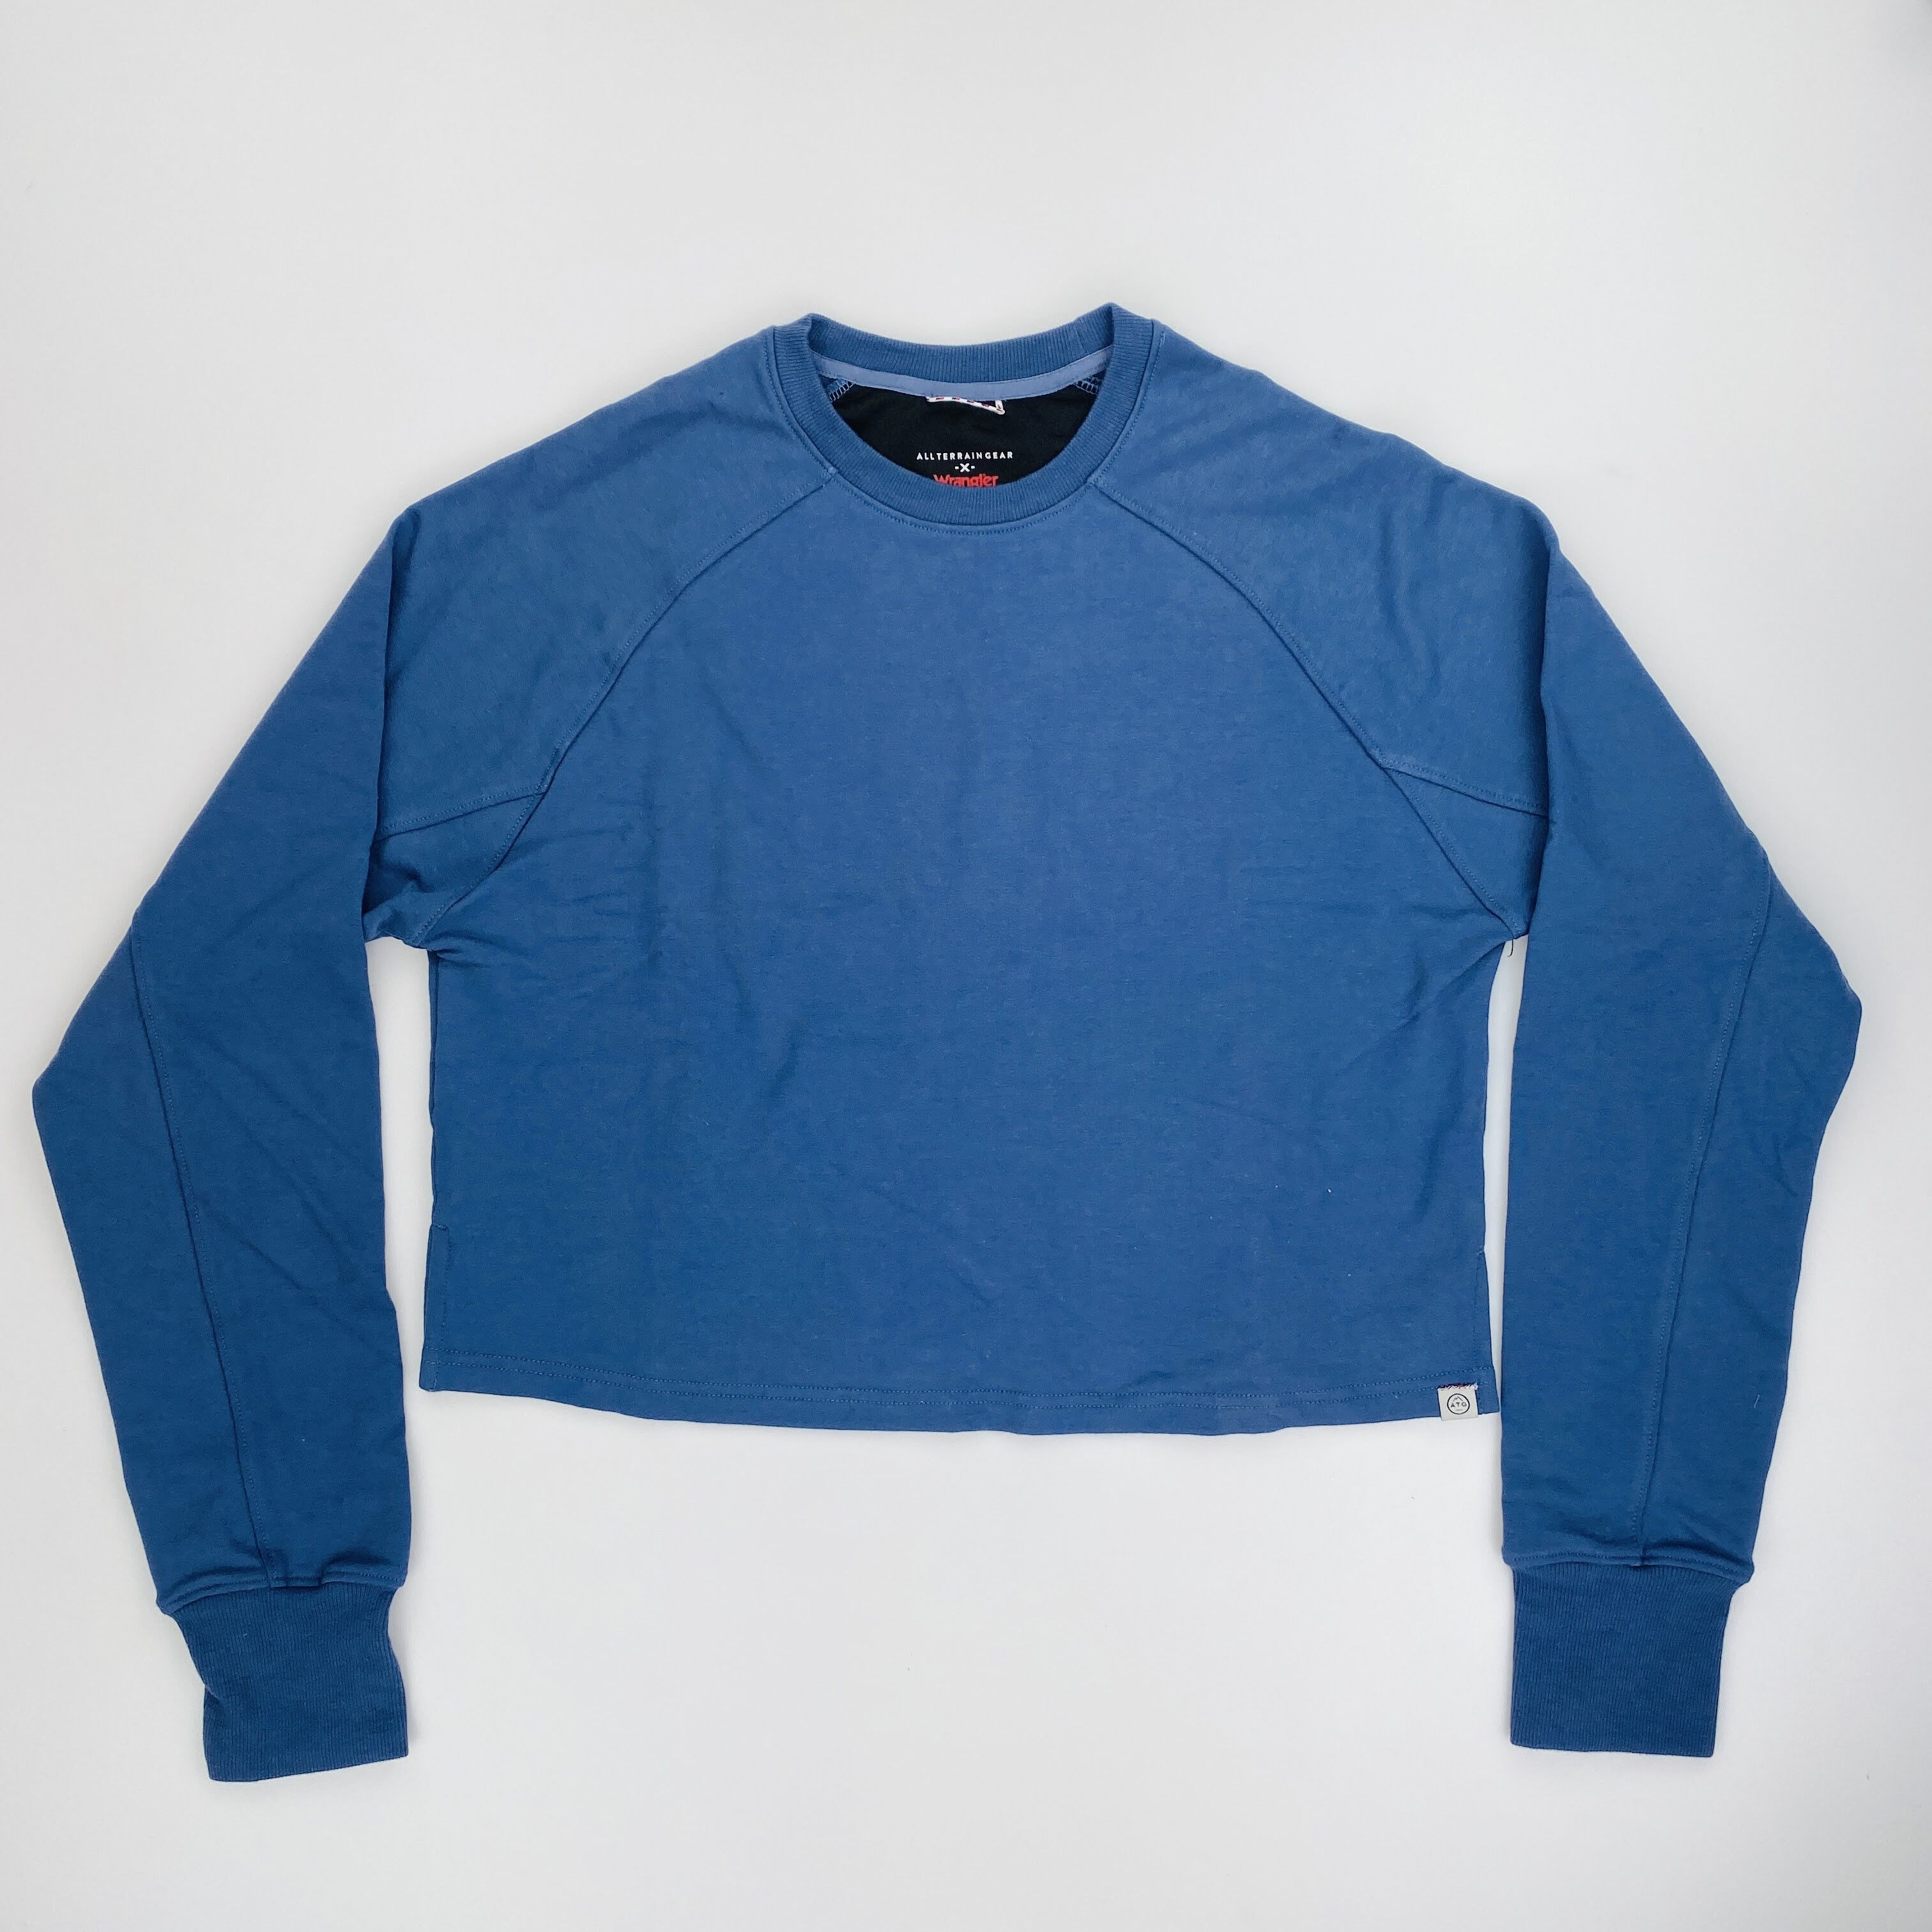 Wrangler Cropped Sweatshirt - Second Hand Hoodie - Women's - Blue - S | Hardloop